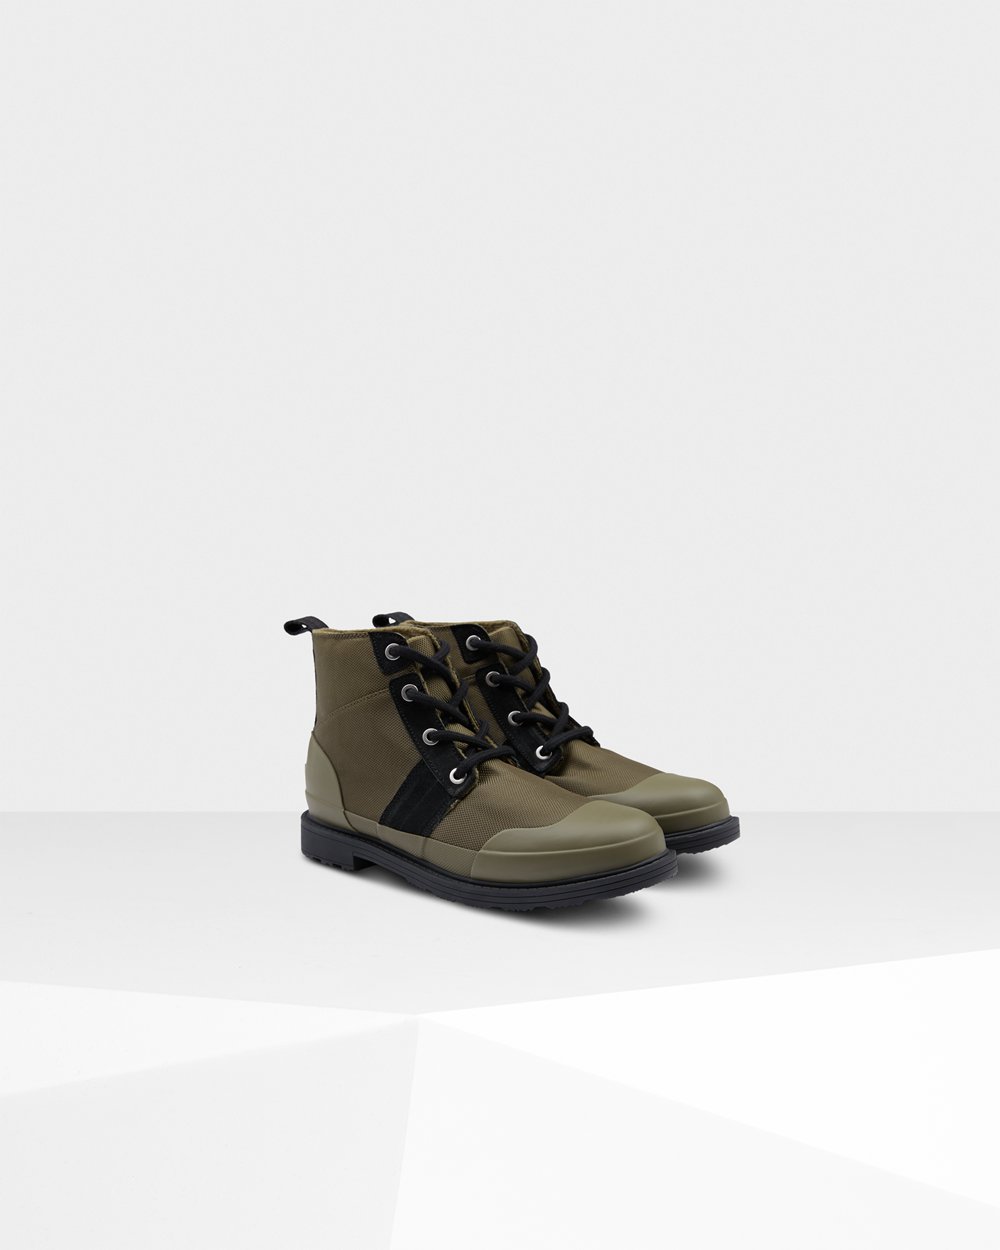 Mens Ankle Boots - Hunter Original Insulated Ankle (68JRISXGH) - Black/Olive